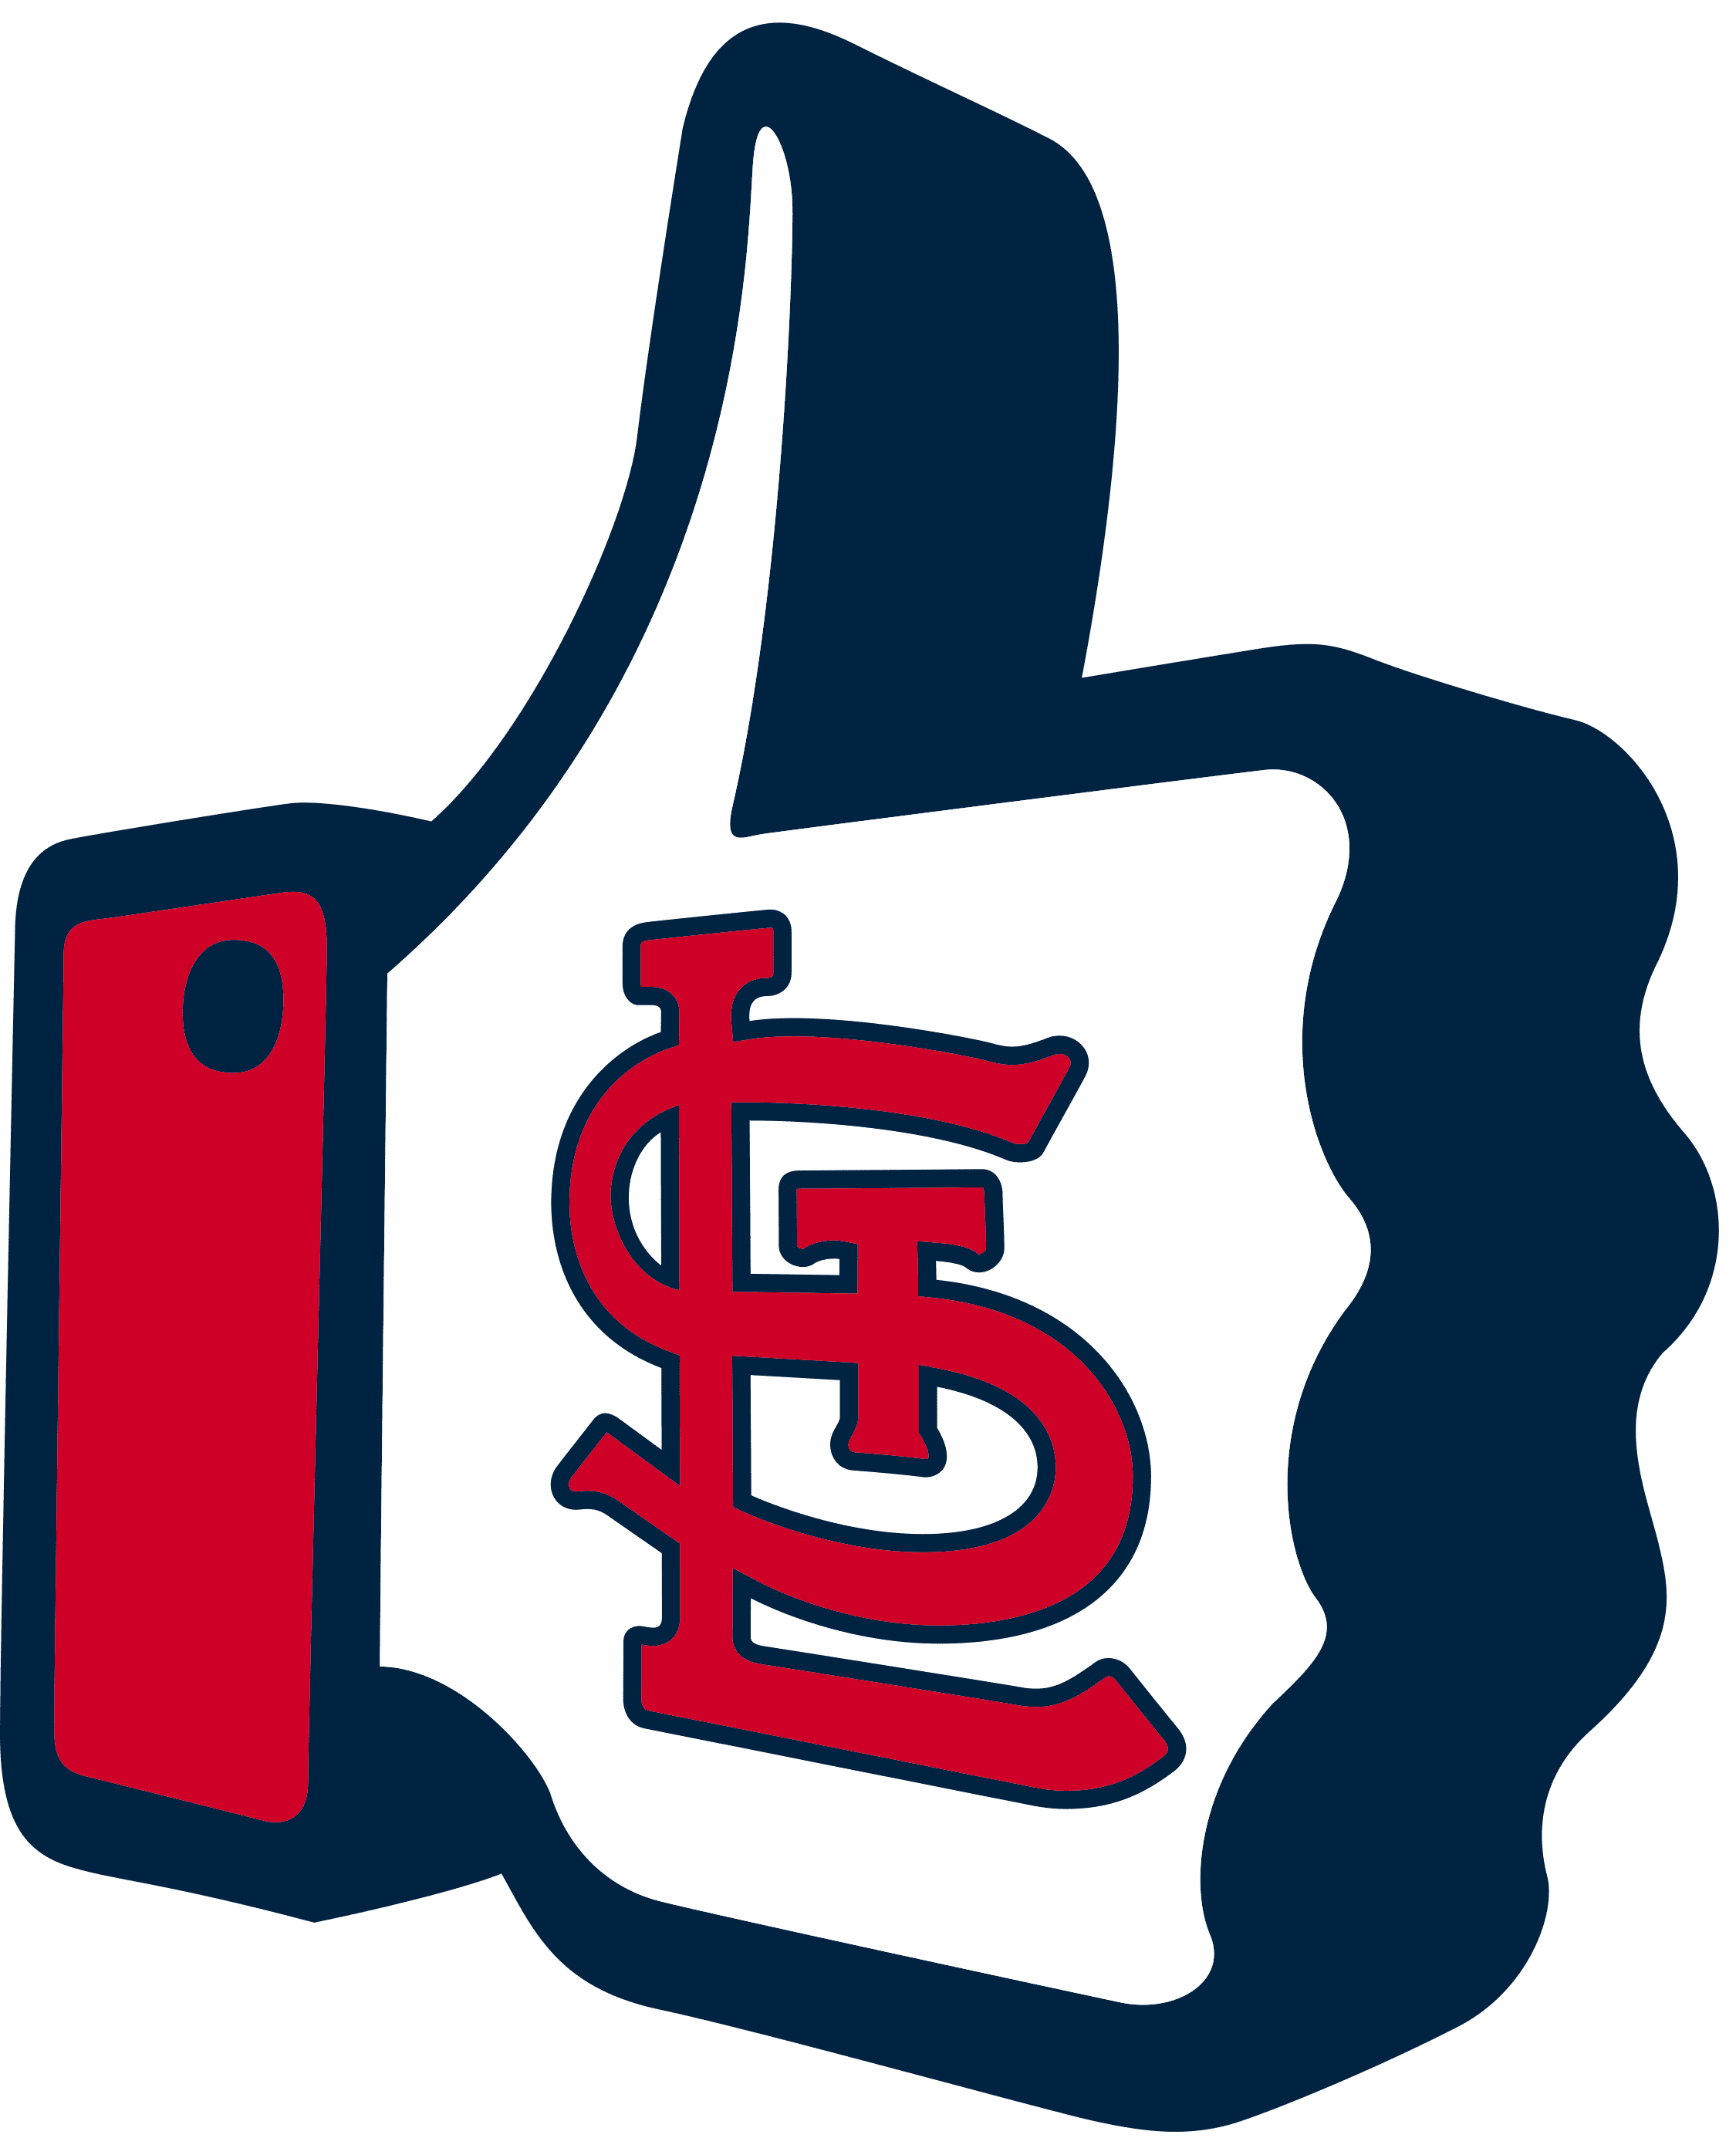 Cardinals Change Their Classic STL Cap Logo – SportsLogos.Net News